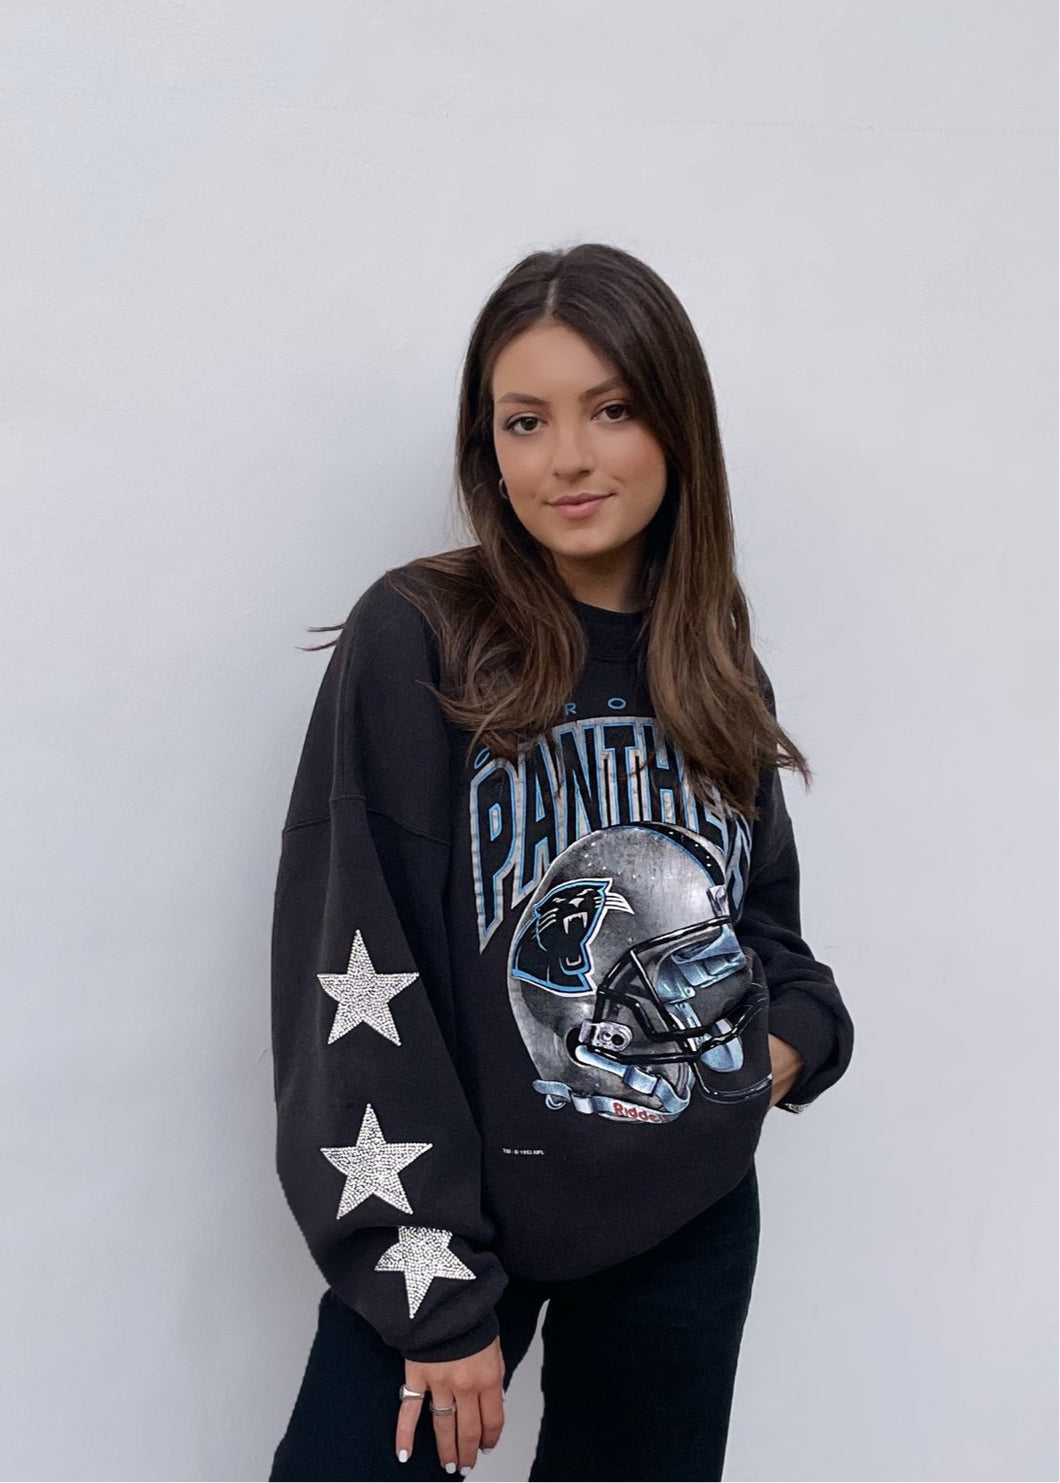 Carolina Panthers, NFL One of a KIND Vintage Sweatshirt with Three Crystal Star Design